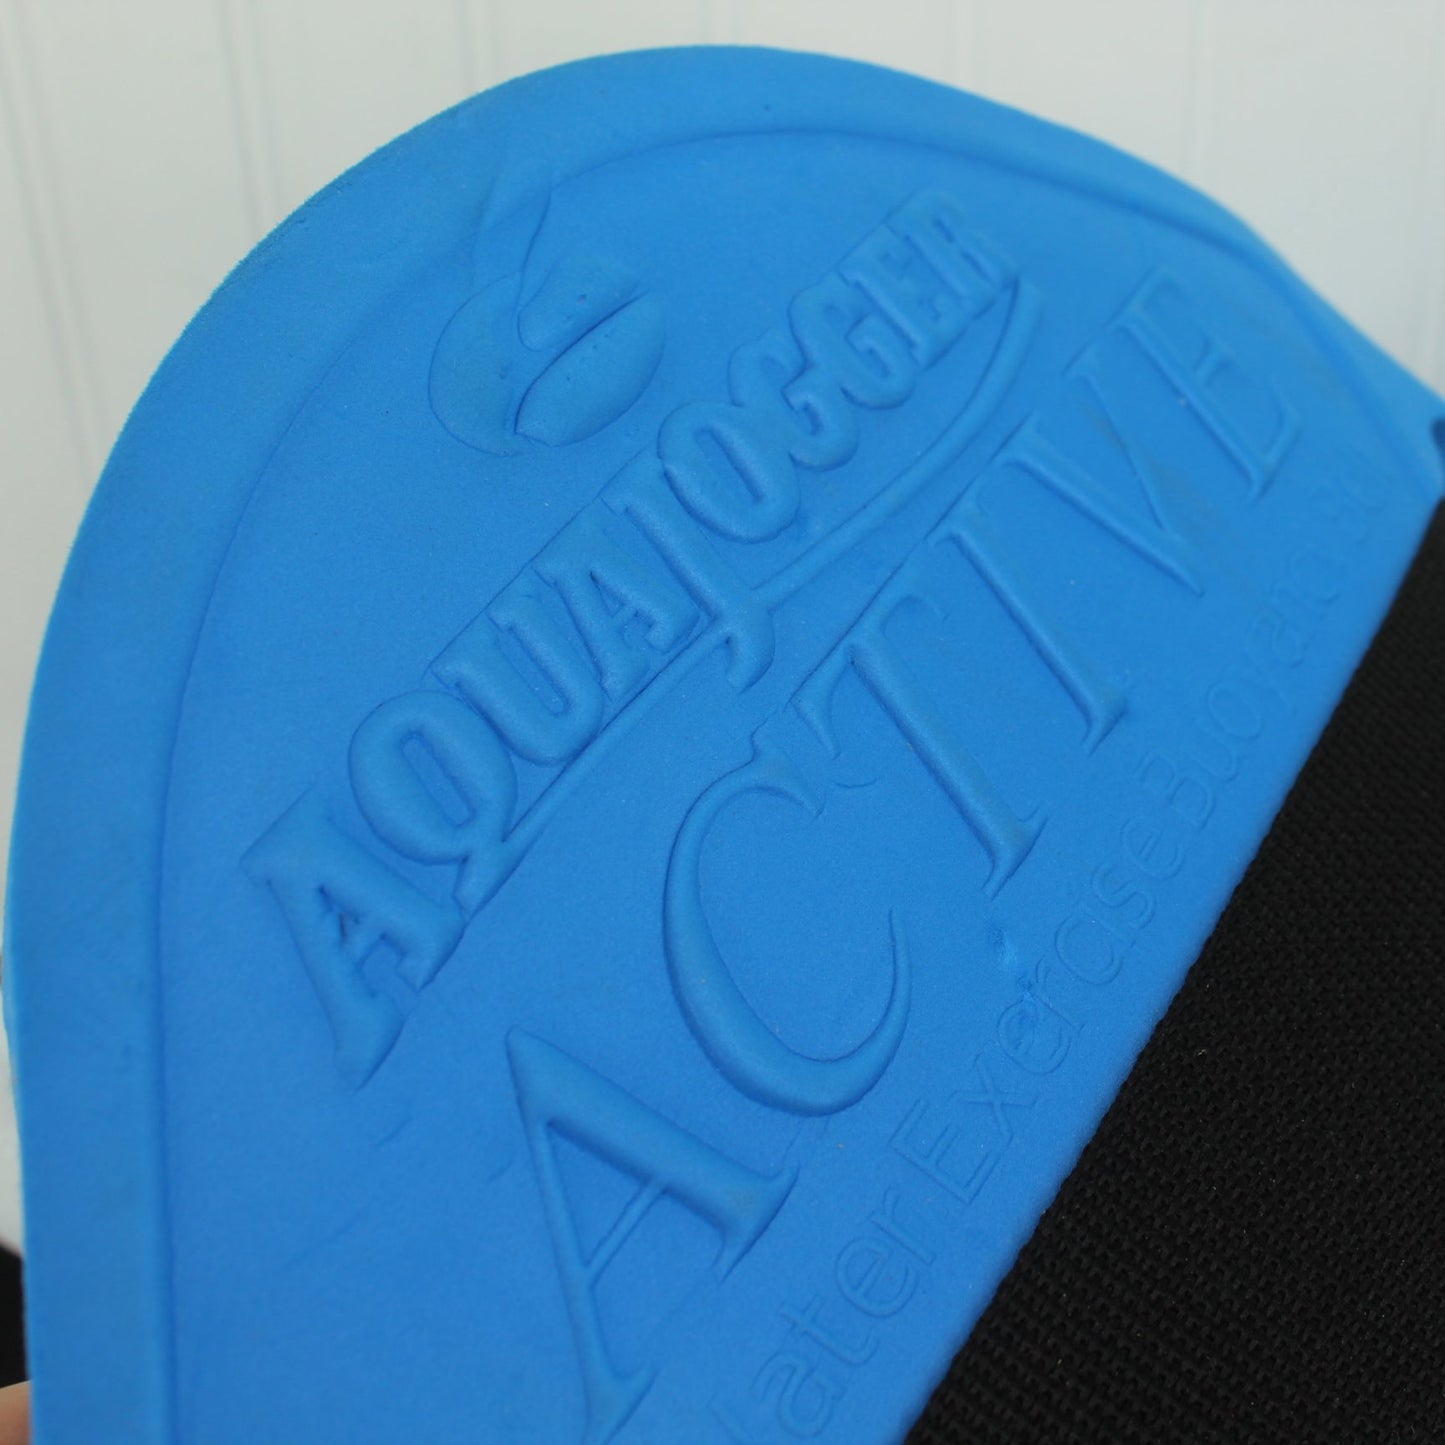 AquaJogger Active Belt Water Workout Pool Exercise Rehab Flotation Adjustable Belt close up